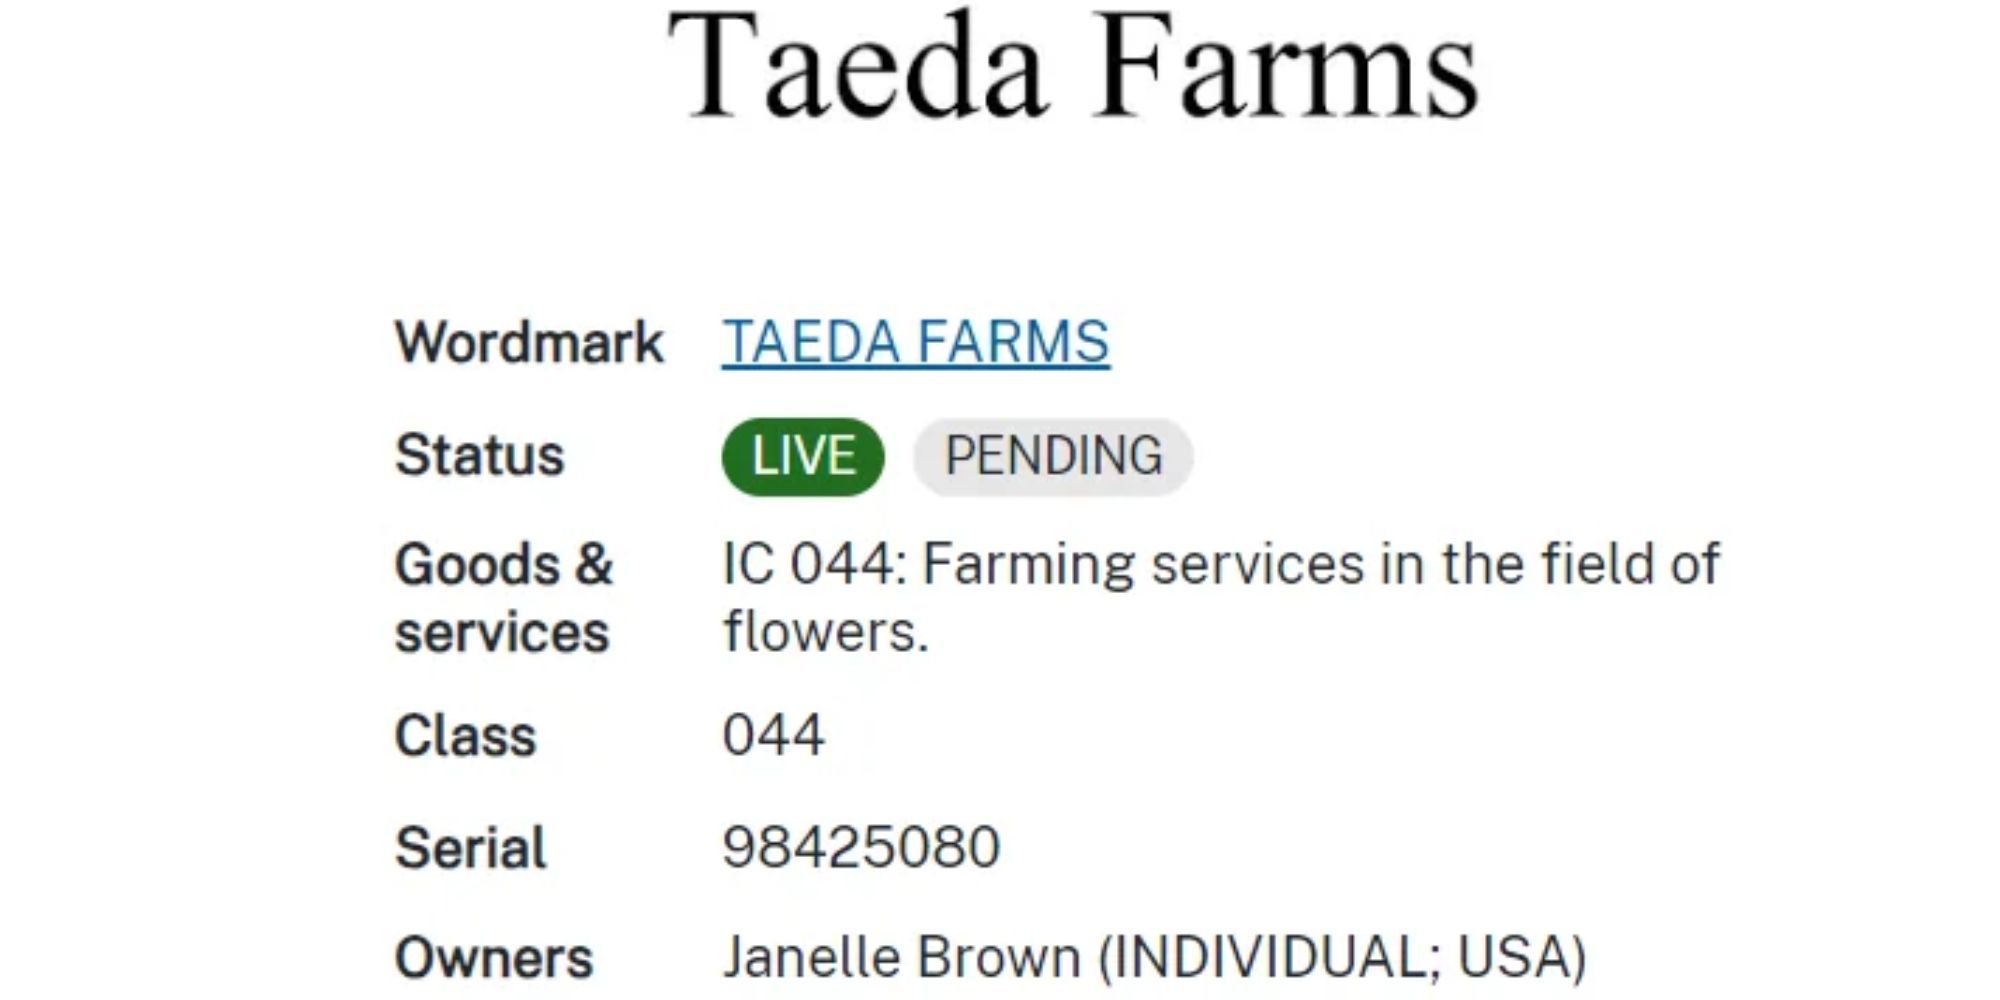 Sister Wives Janelle Brown's business registration details, as posted on Reddit